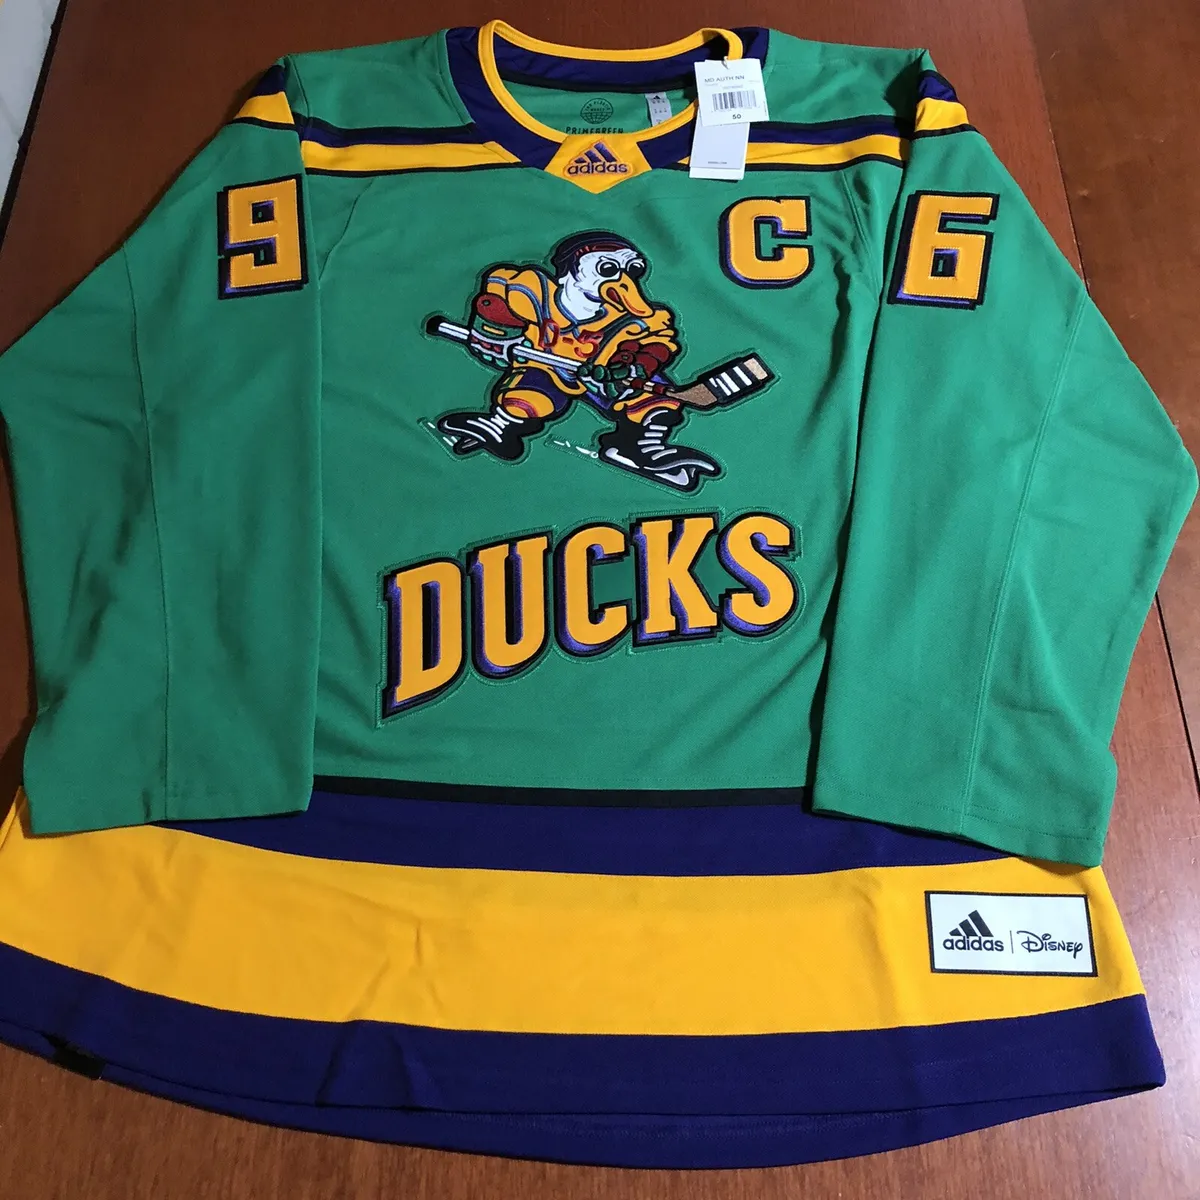 Adidas, Disney team up to release 'Mighty Ducks' jerseys